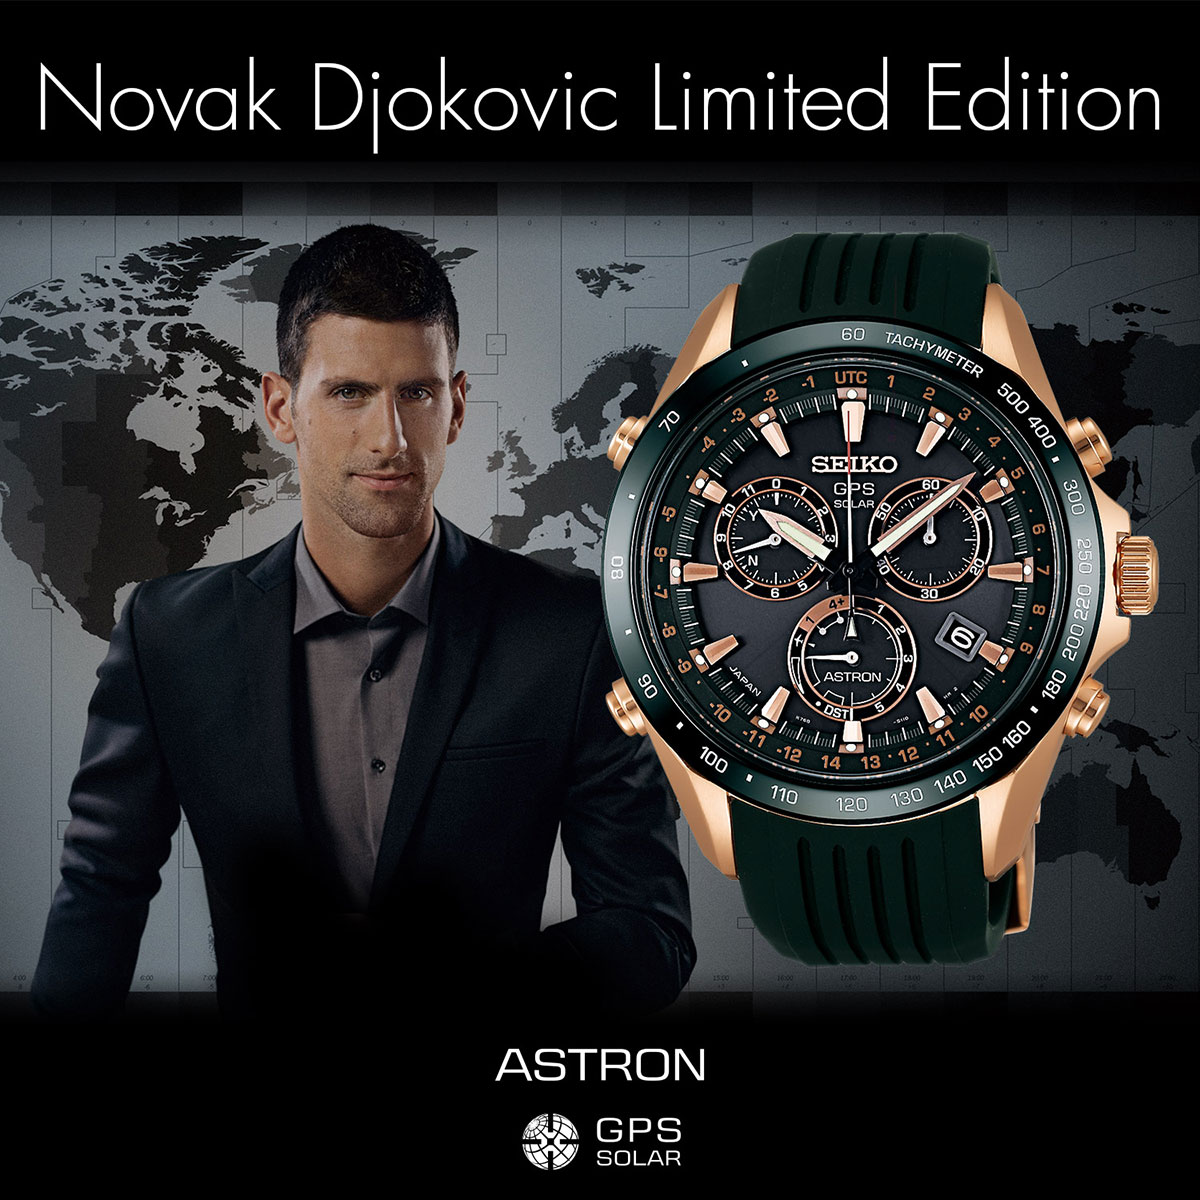 Novak Djokovic Wins Wimbledon 2015, On His Wrist The Seiko Astron Djokovic Limited Edition